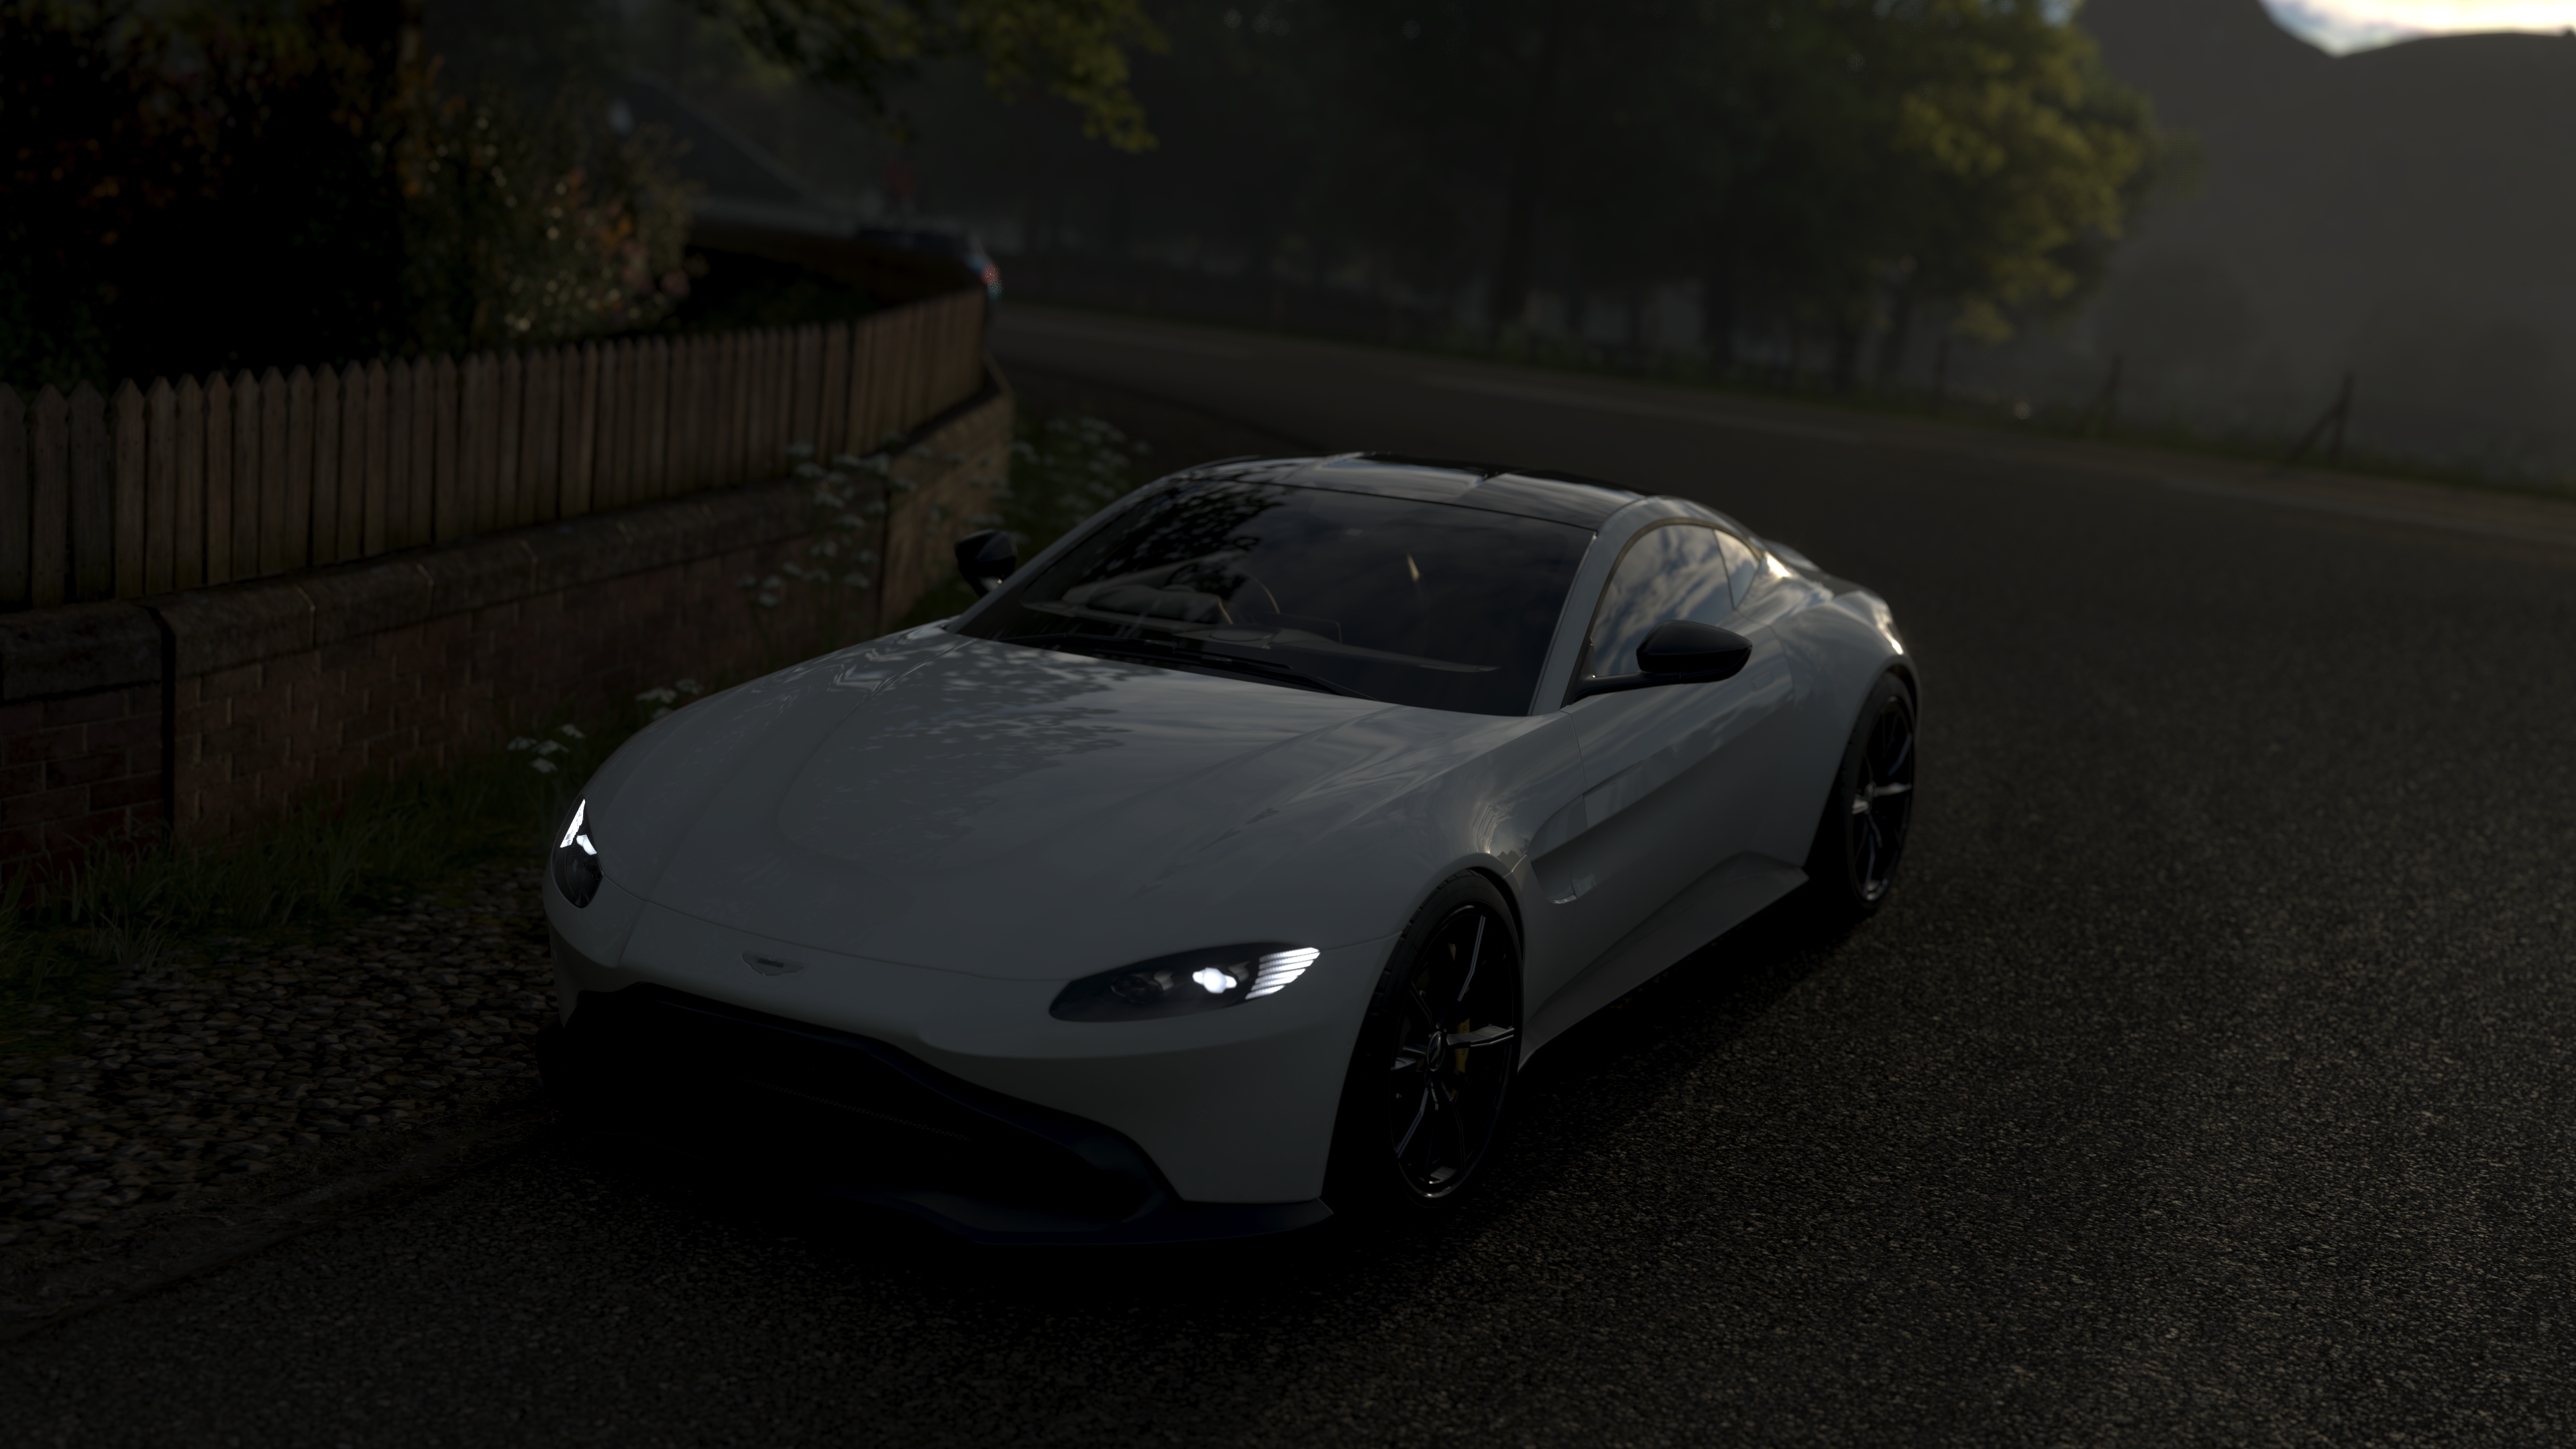 General 3840x2160 Forza Forza Horizon 4 car vehicle white cars video games screen shot Aston Martin